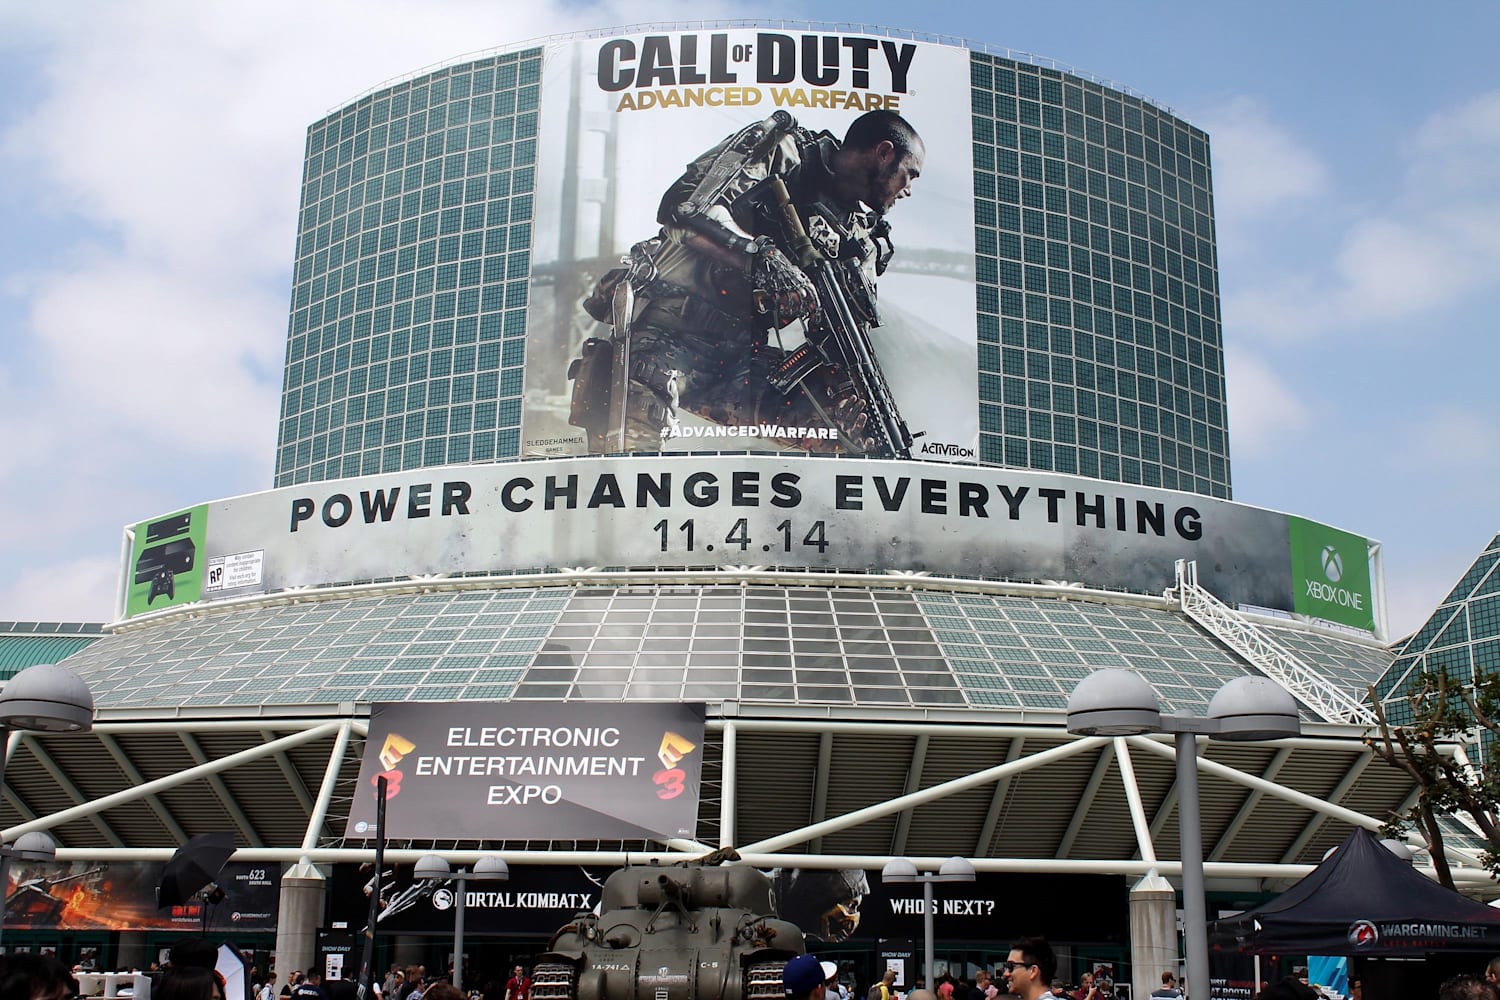 Elder Scrolls 6 Set for E3 2015 Release? 5 Most Crazy Rumours So